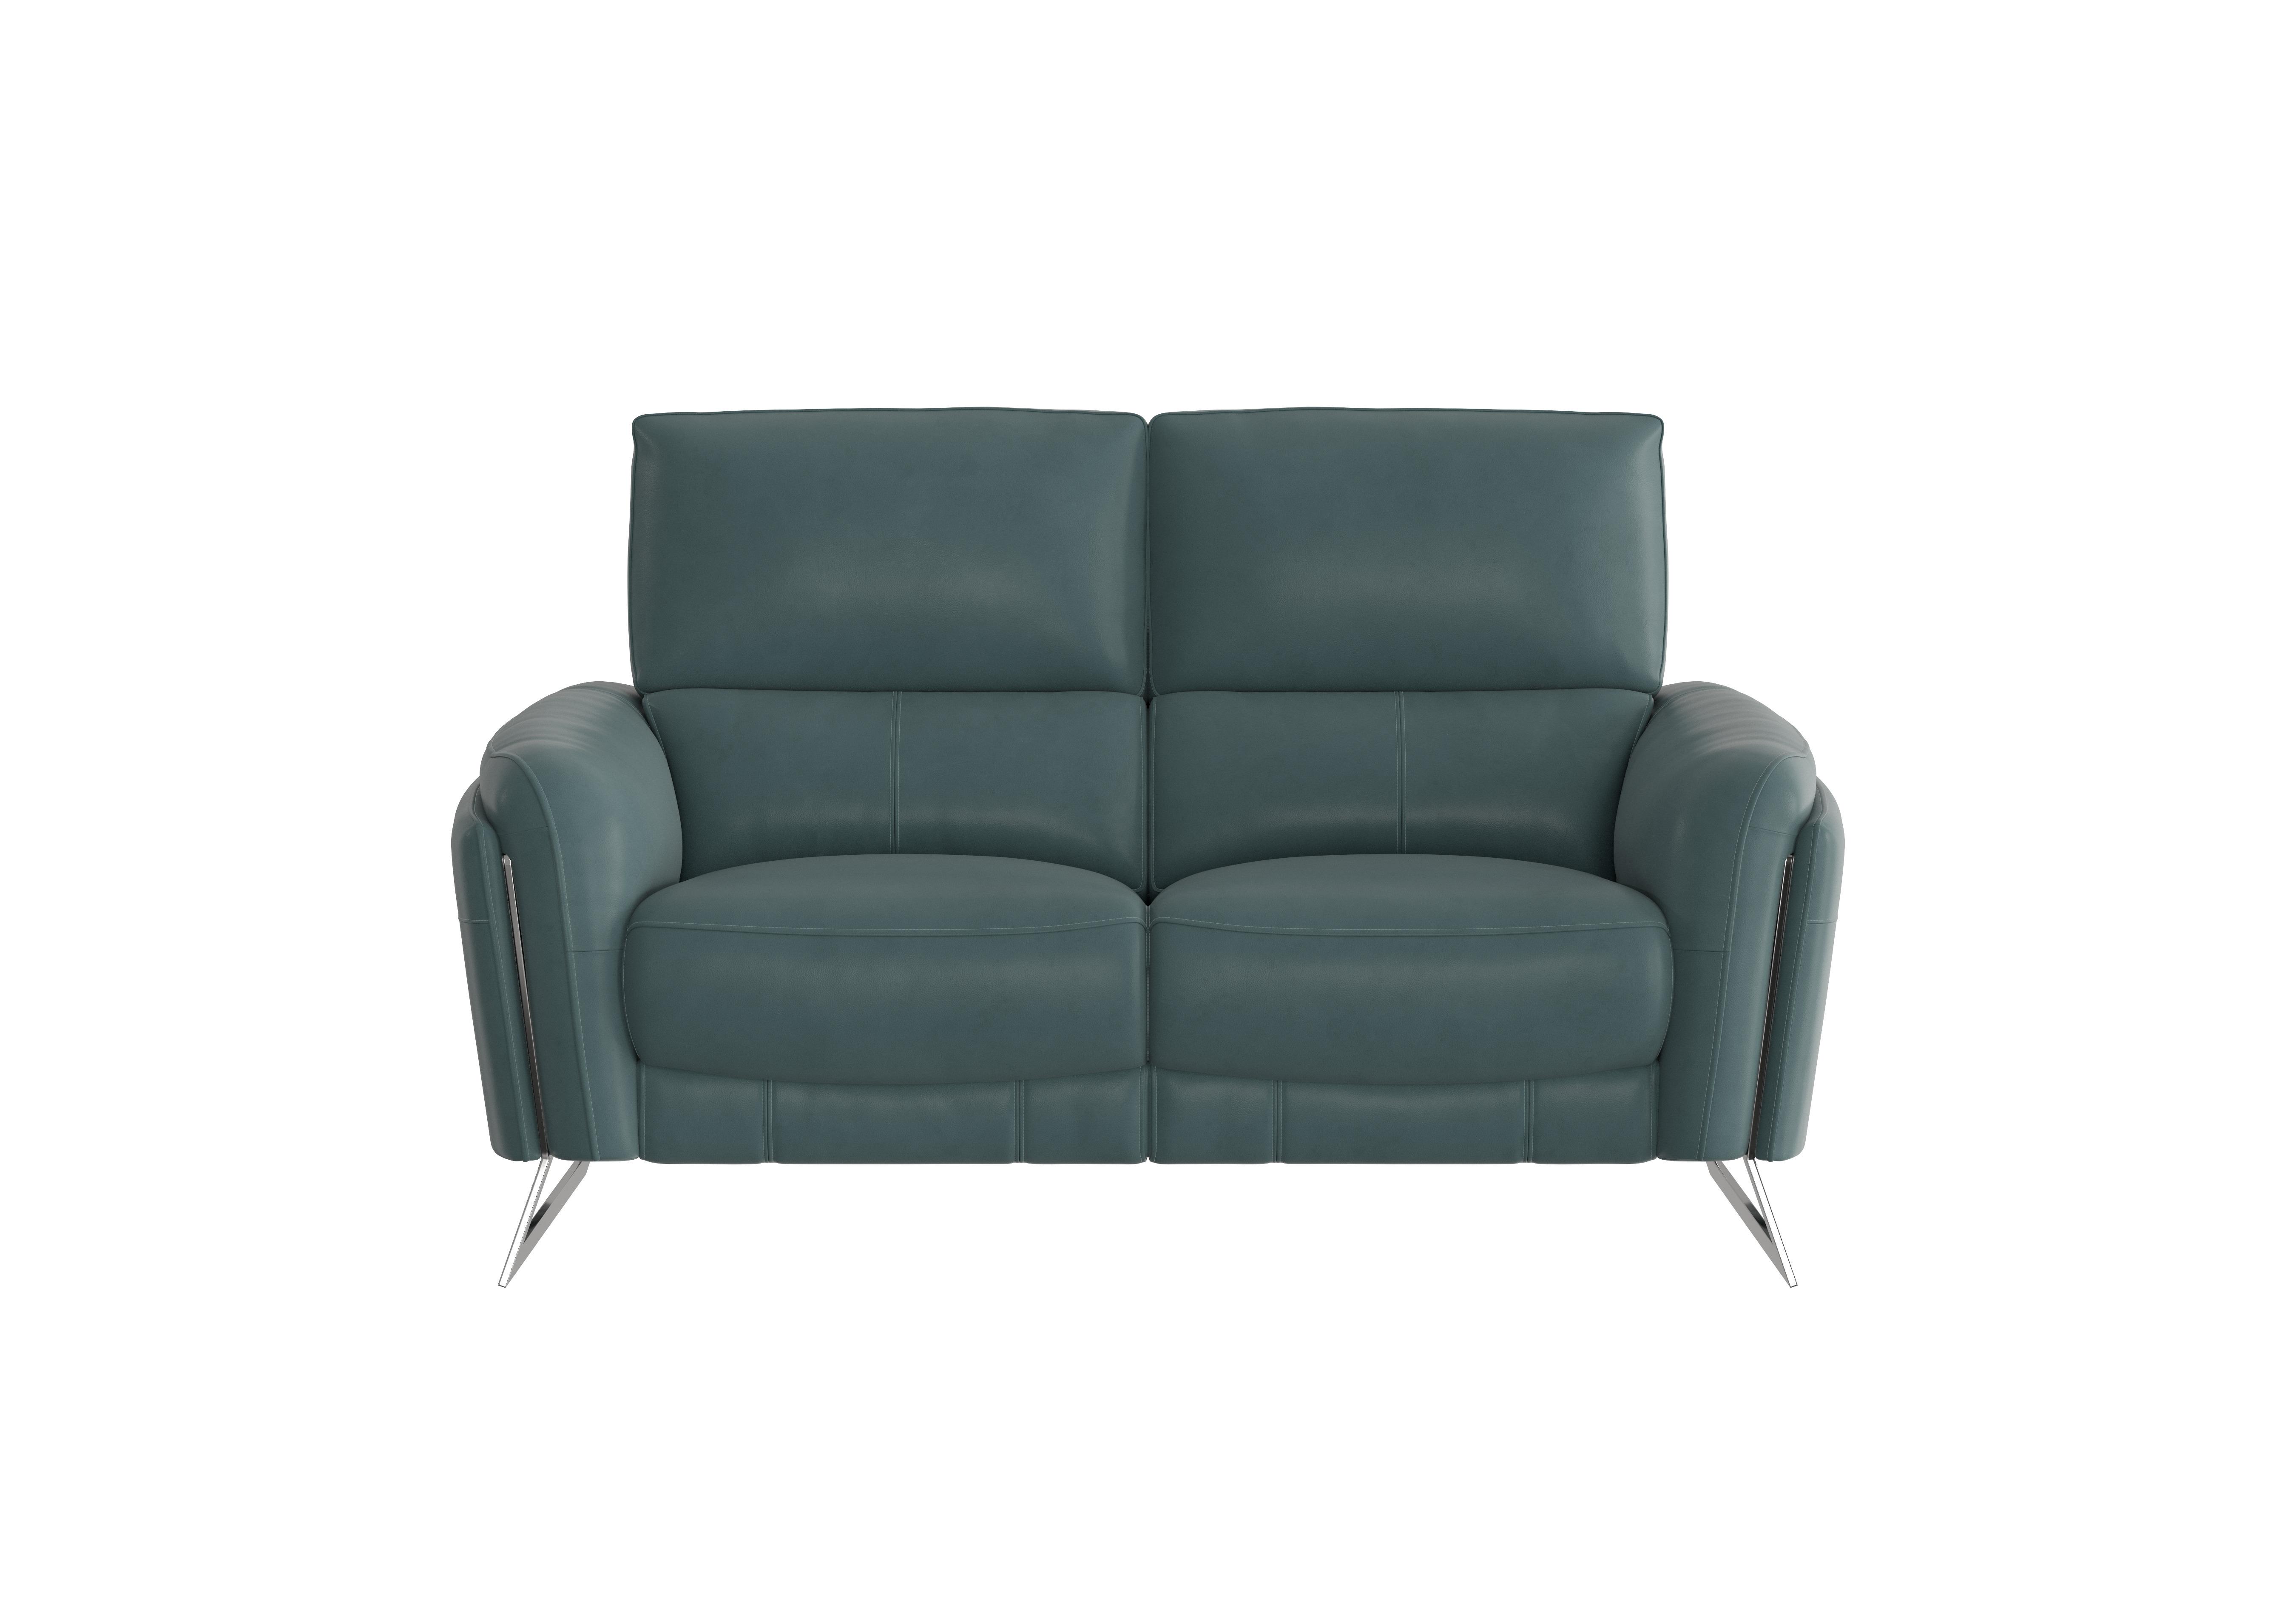 Amarilla 2 Seater Leather Sofa in Bv-301e Lake Green on Furniture Village